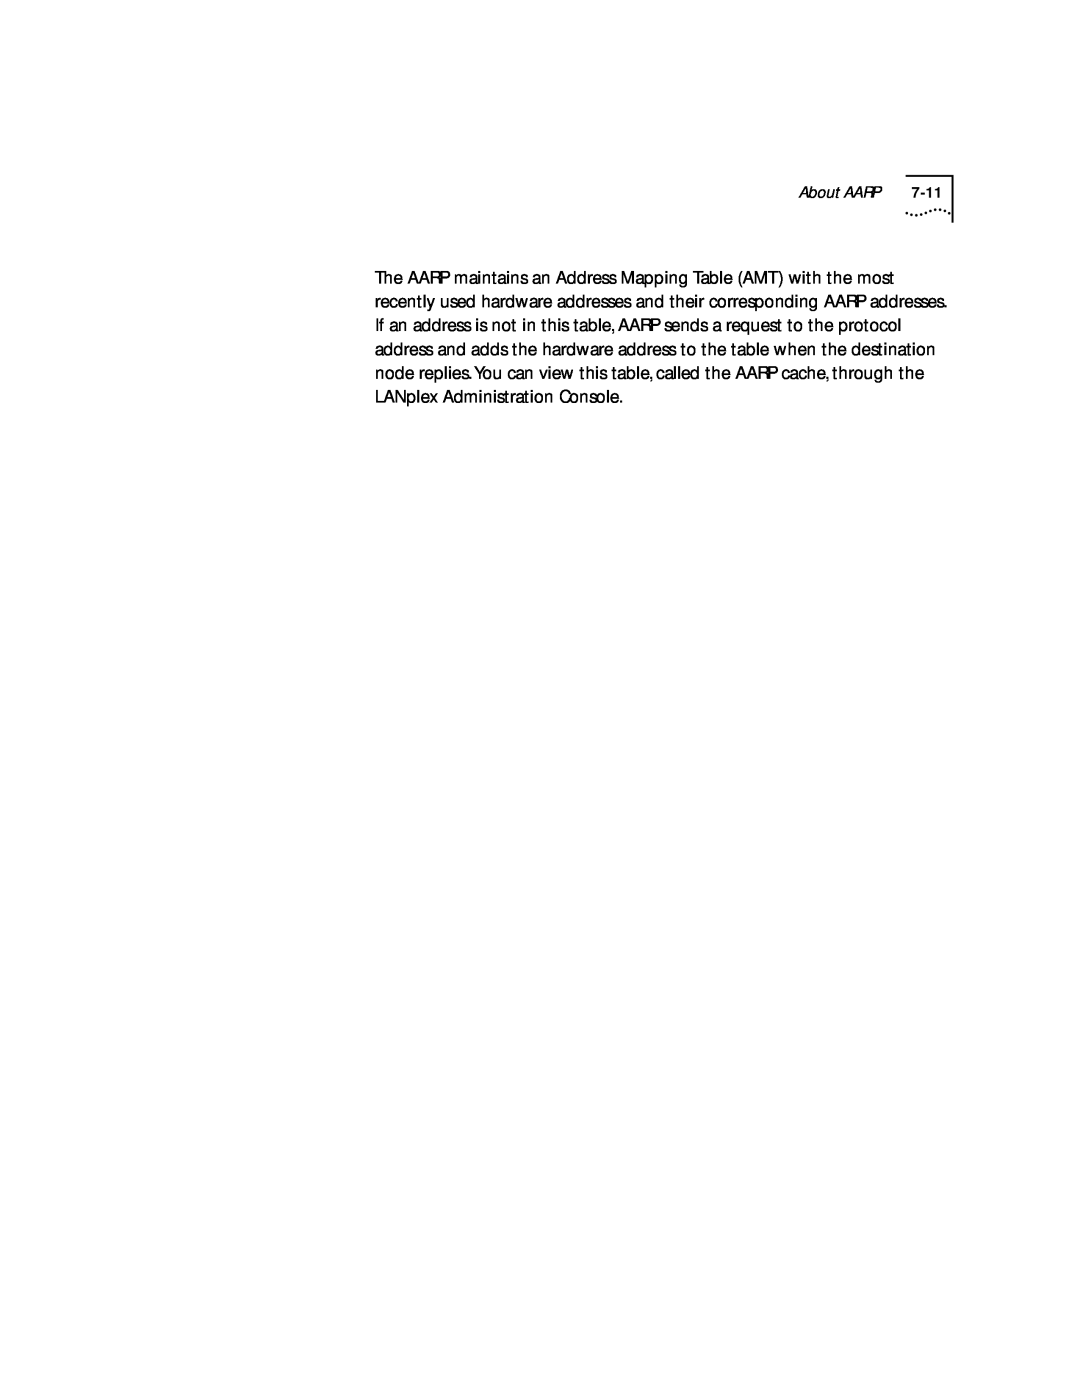 3Com 2500 manual About AARP, 7-11 